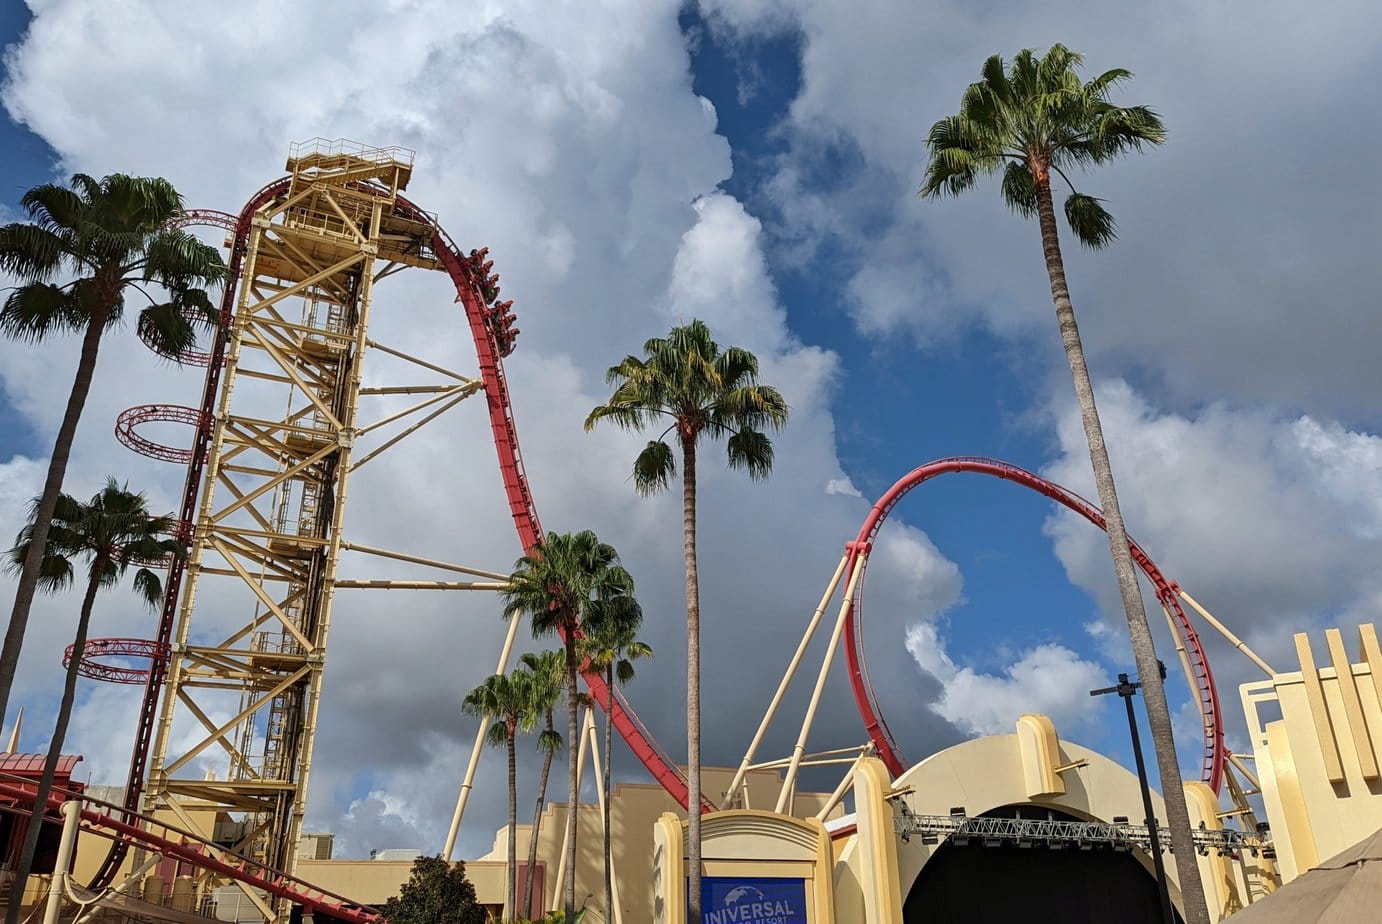 Hollywood Rip Ride Rockit in Universal Studios Florida — UO FAN GUIDE